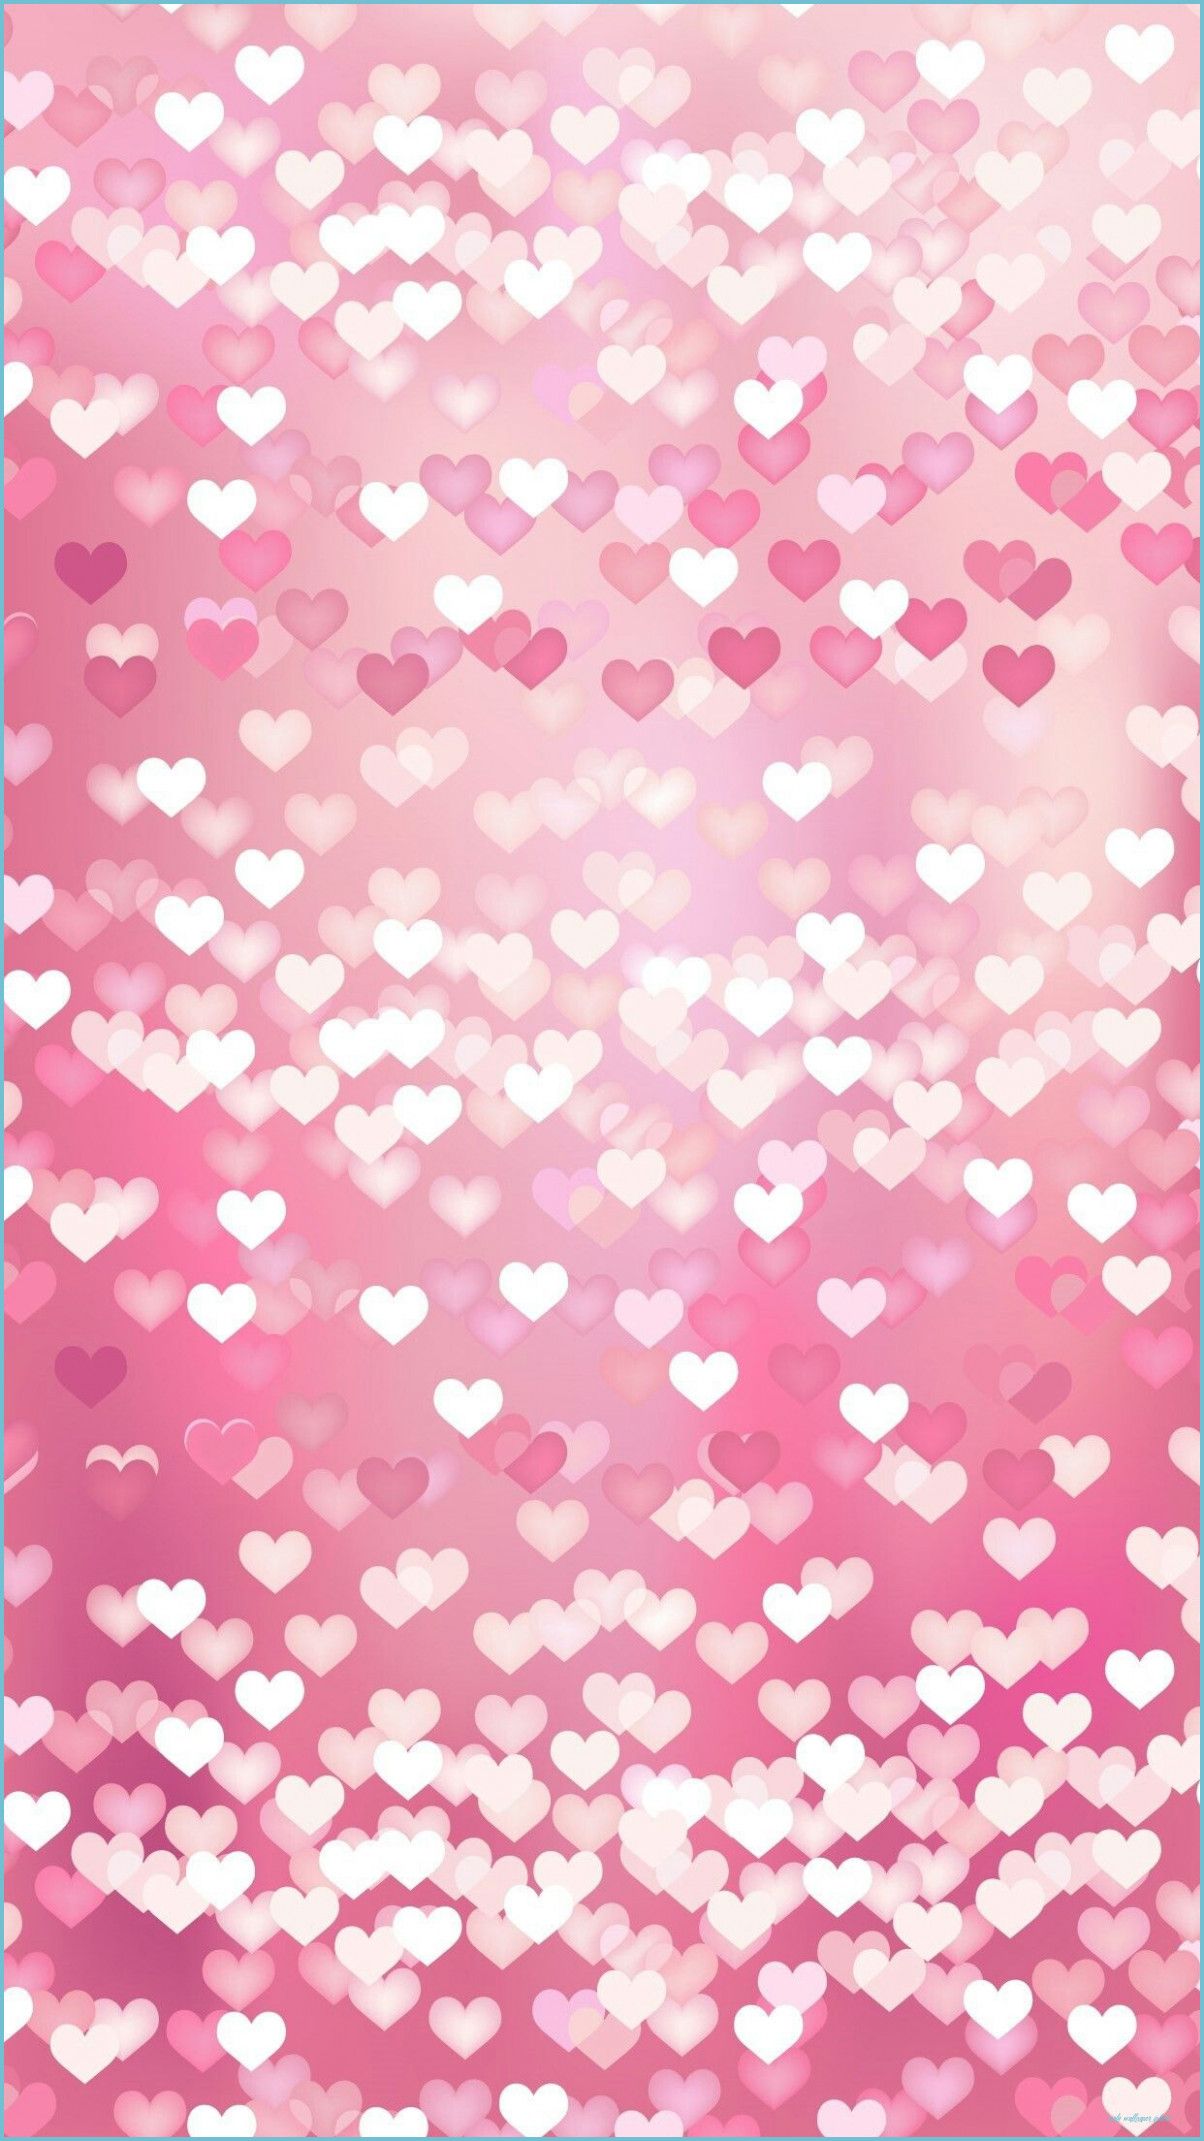 Cute Girly Wallpaper for Desktop image iPhone wallpaper girly wallpaper iphone